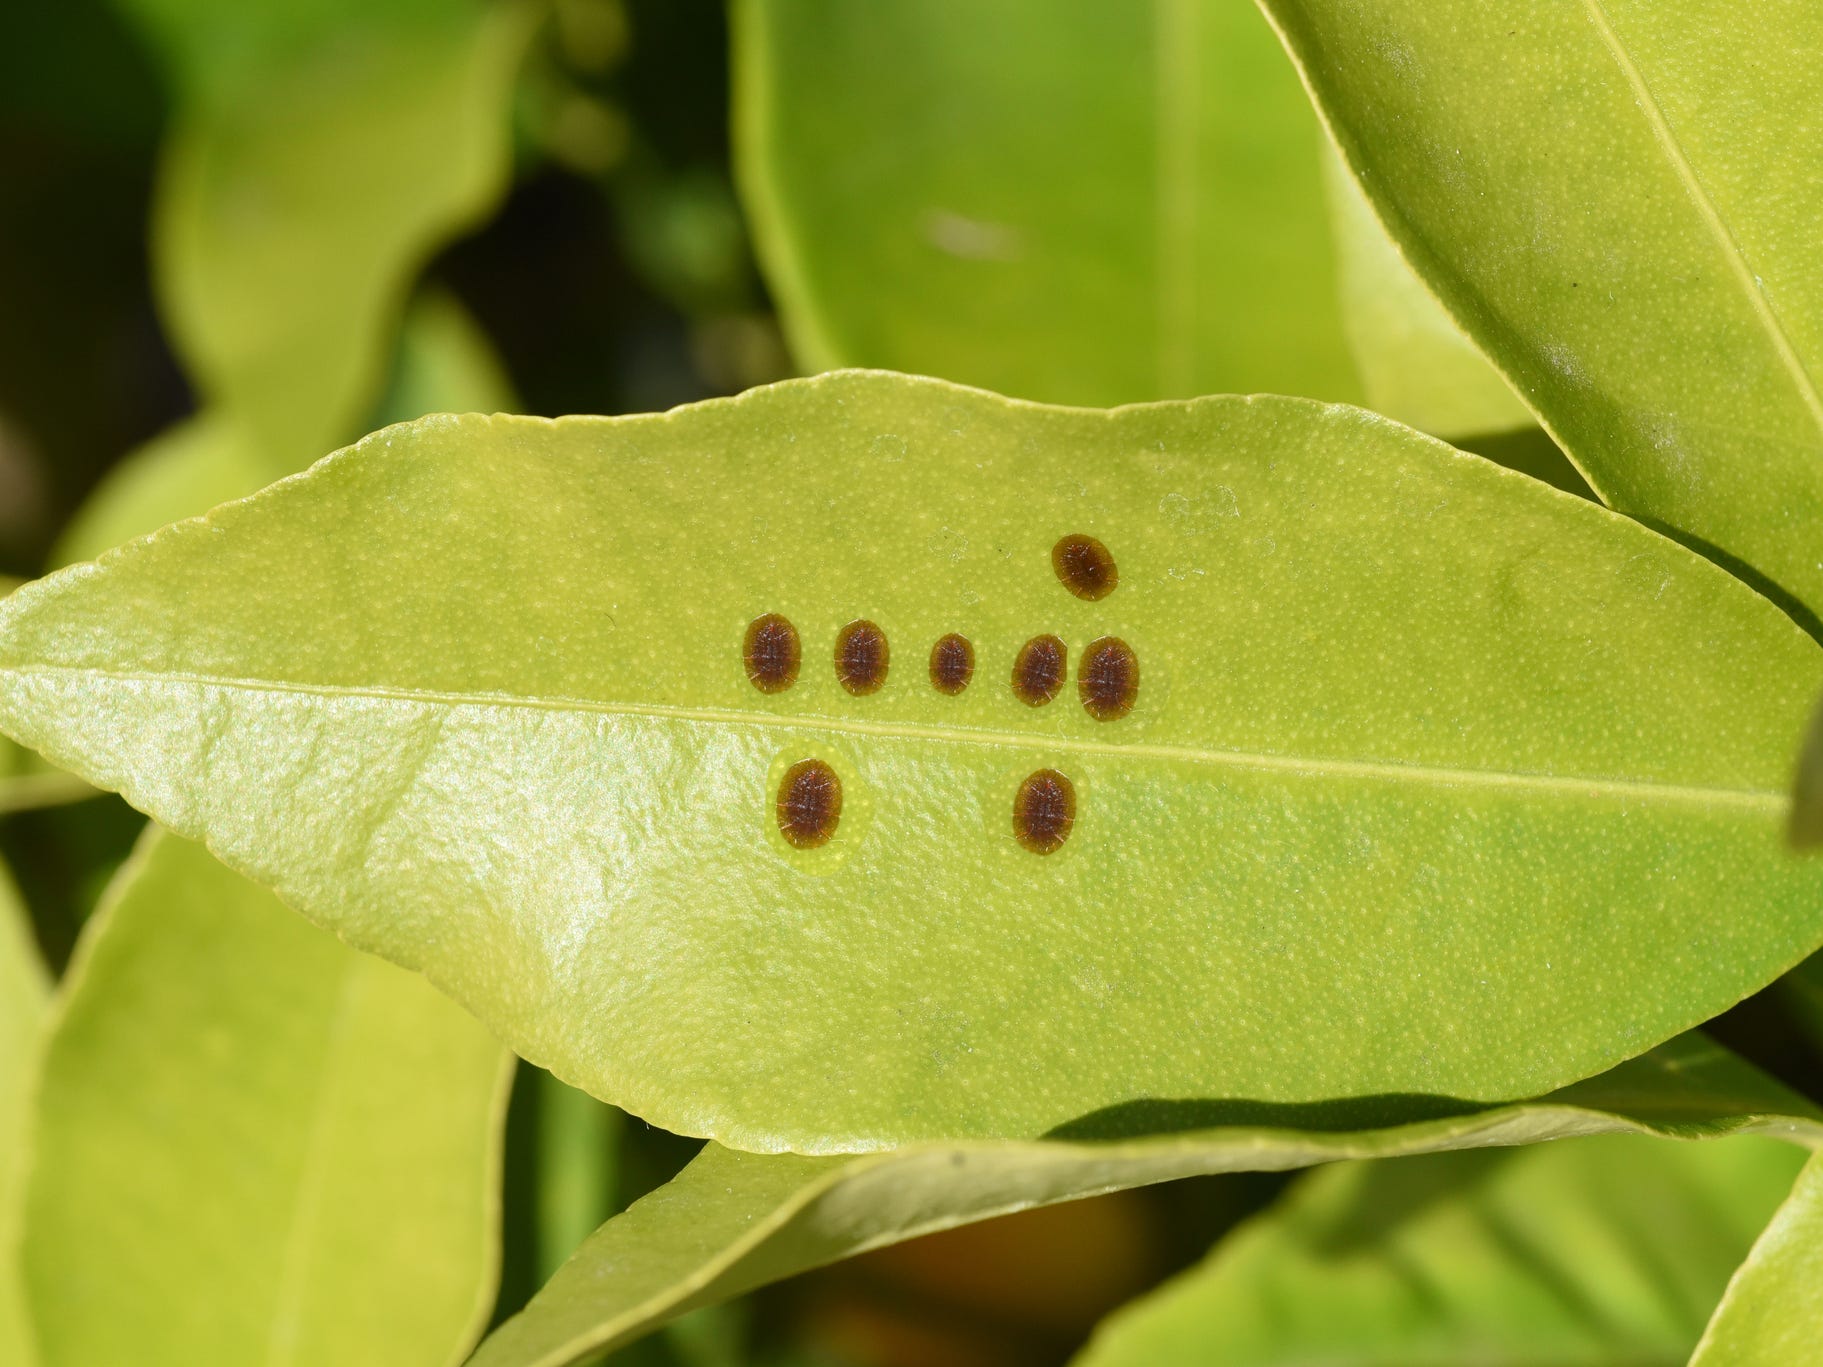 Scale bugs on a leaf